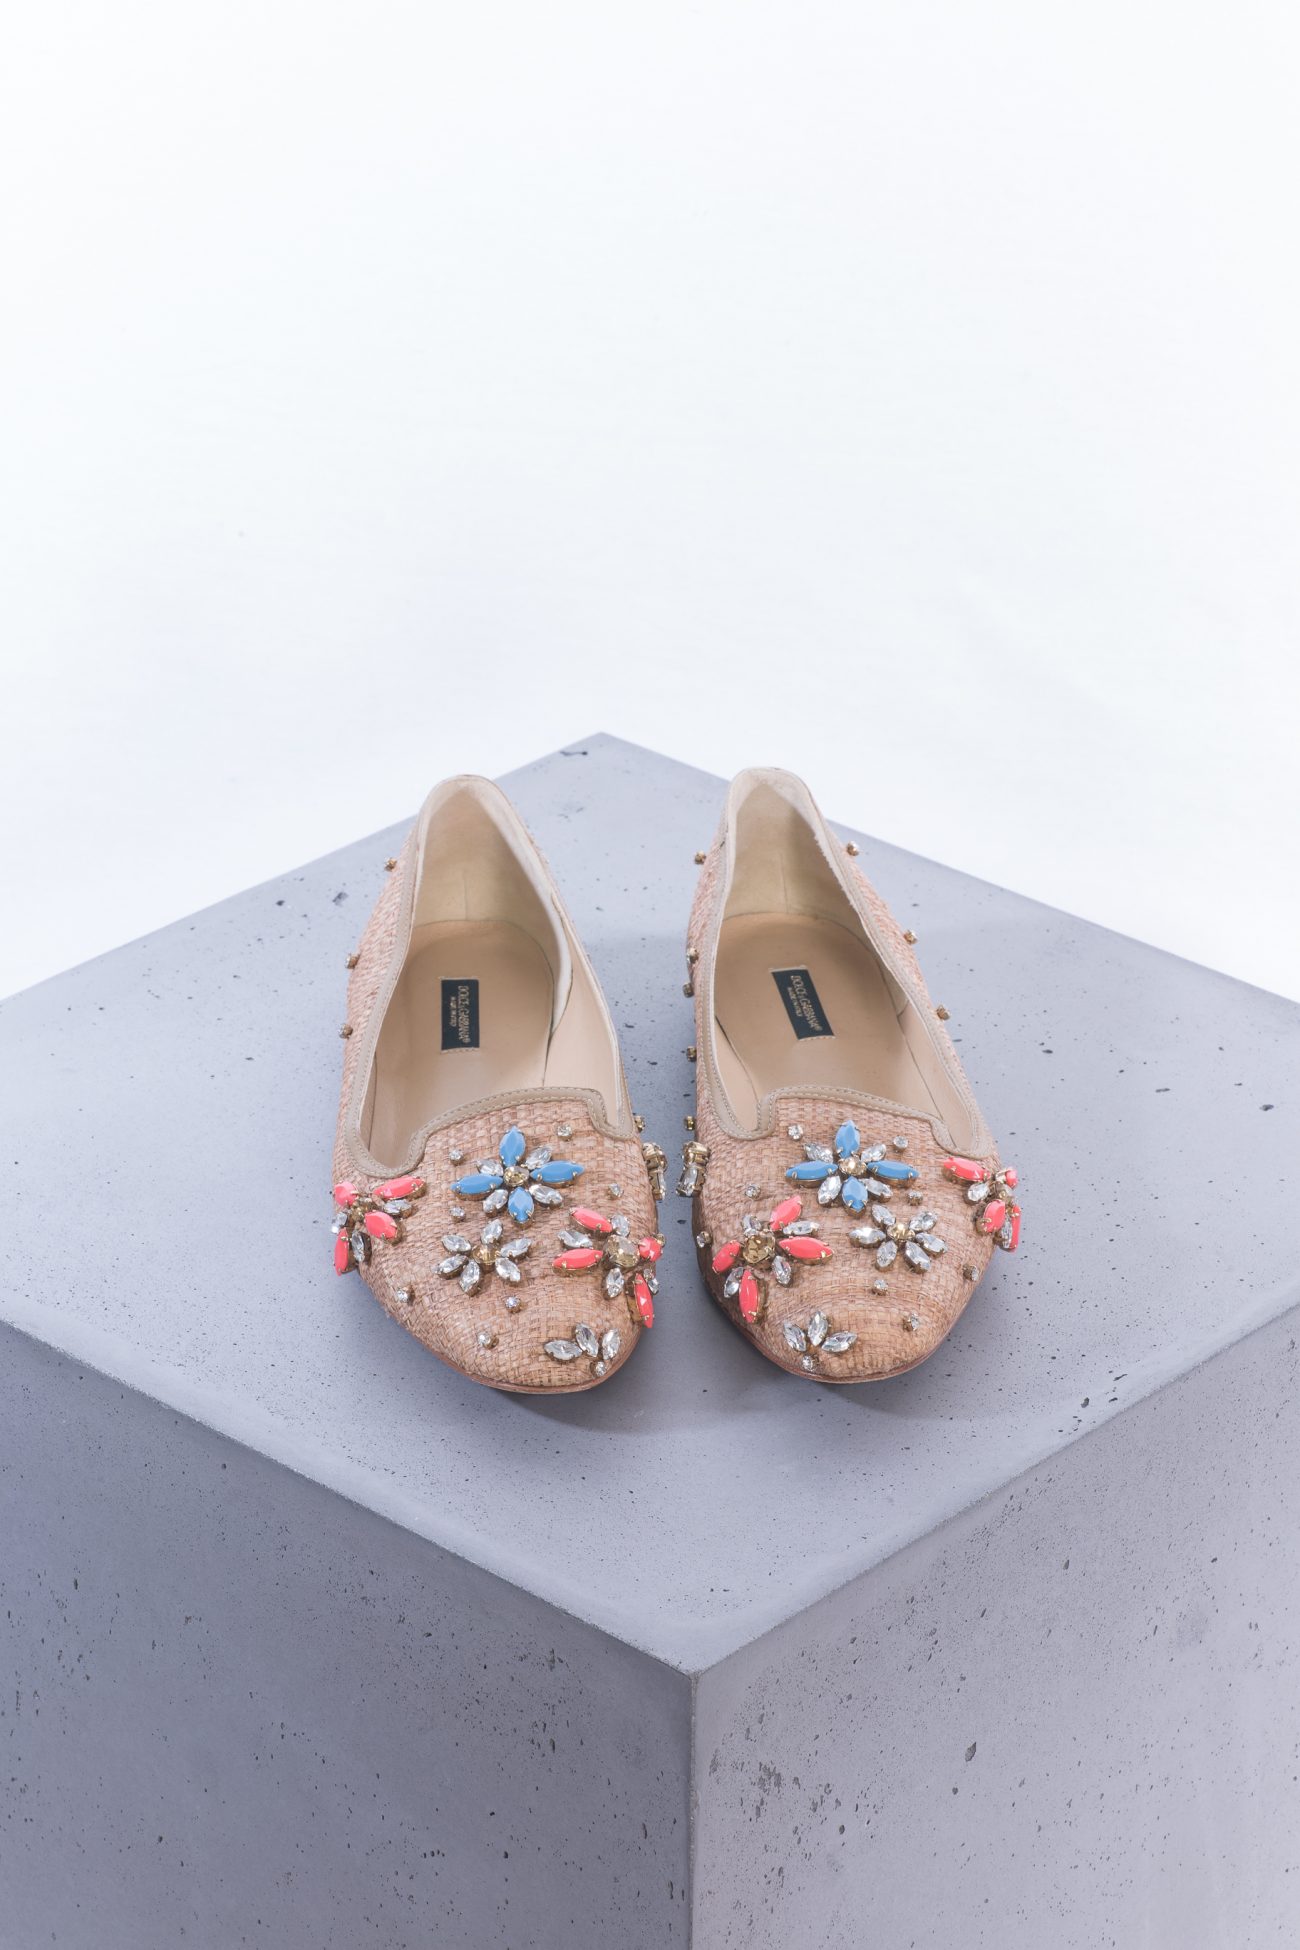 Dolce&Gabbana Beige raffia slipper flats with flower embellishments